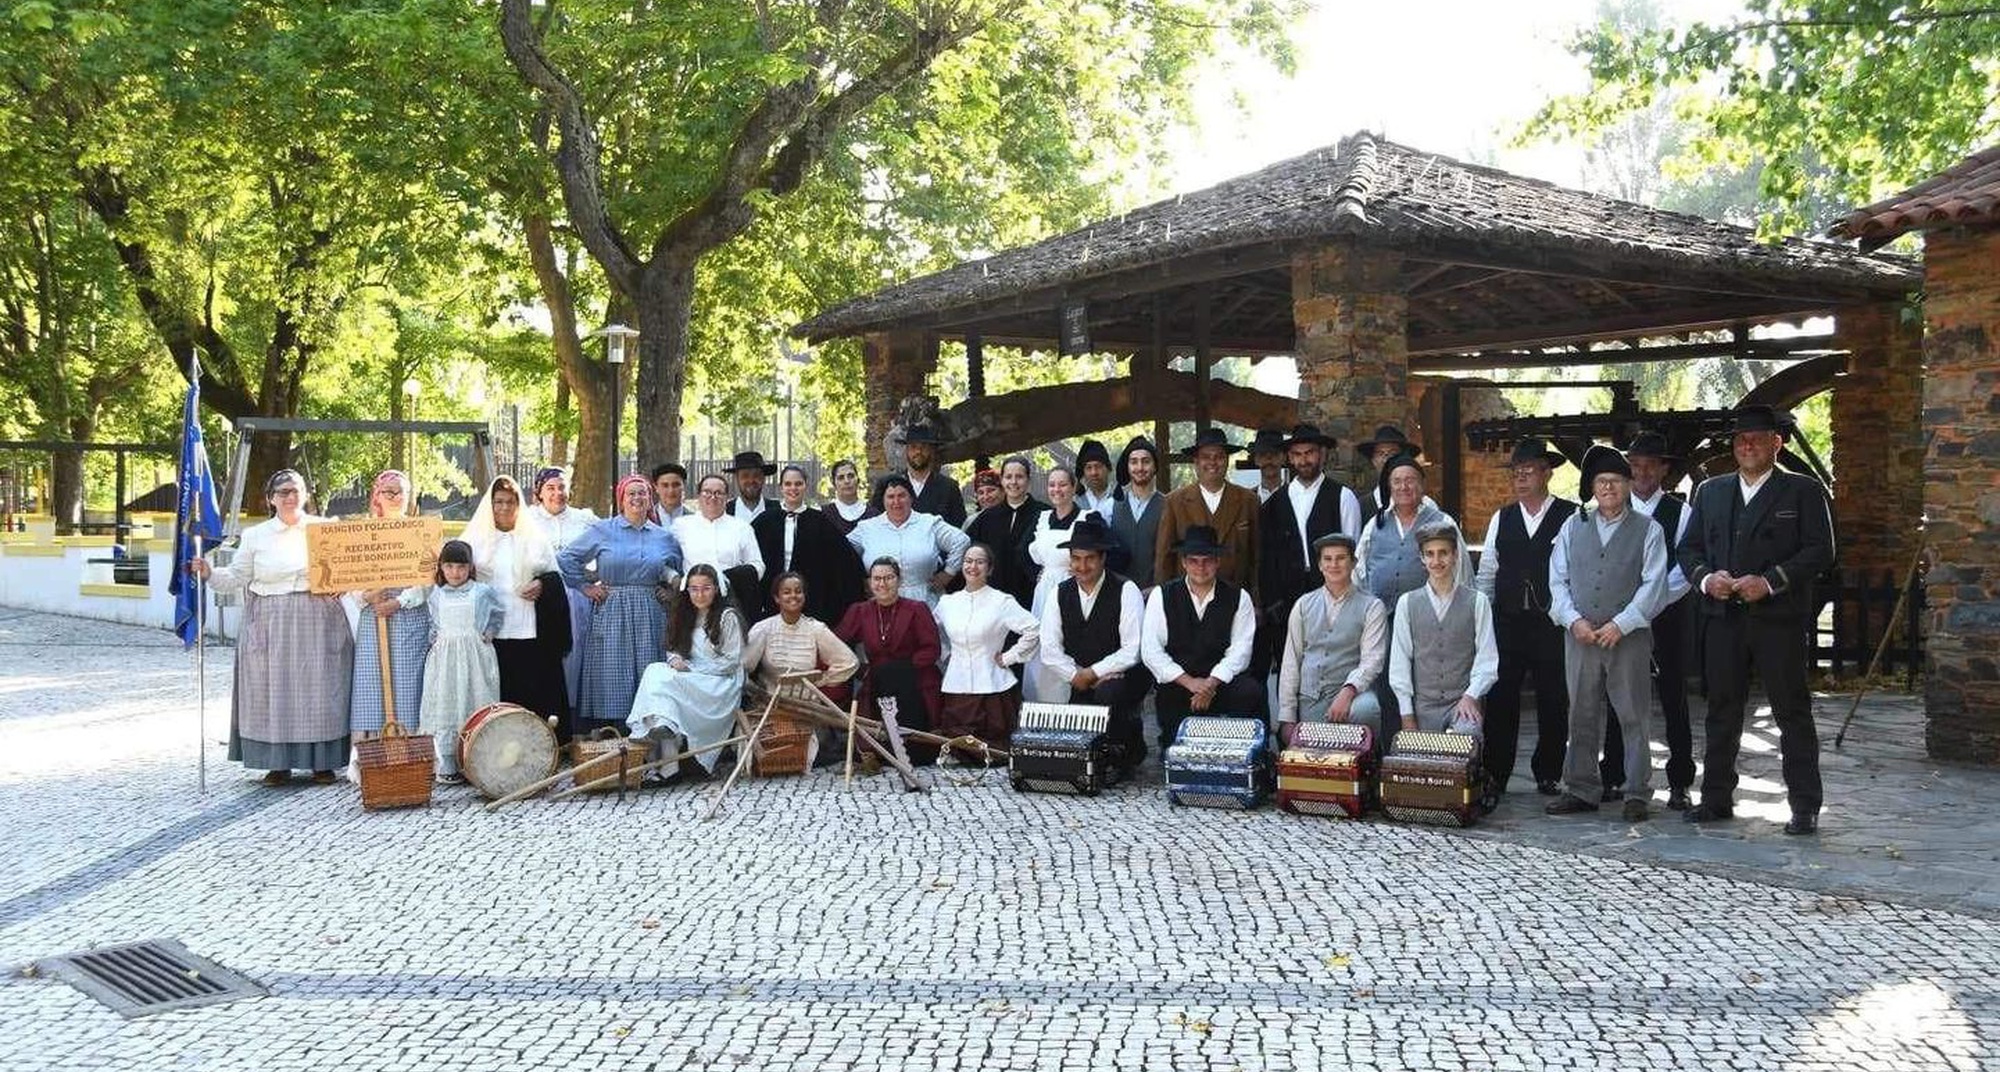 Raízes Folk Fest – Festival de Folclore do Mundo